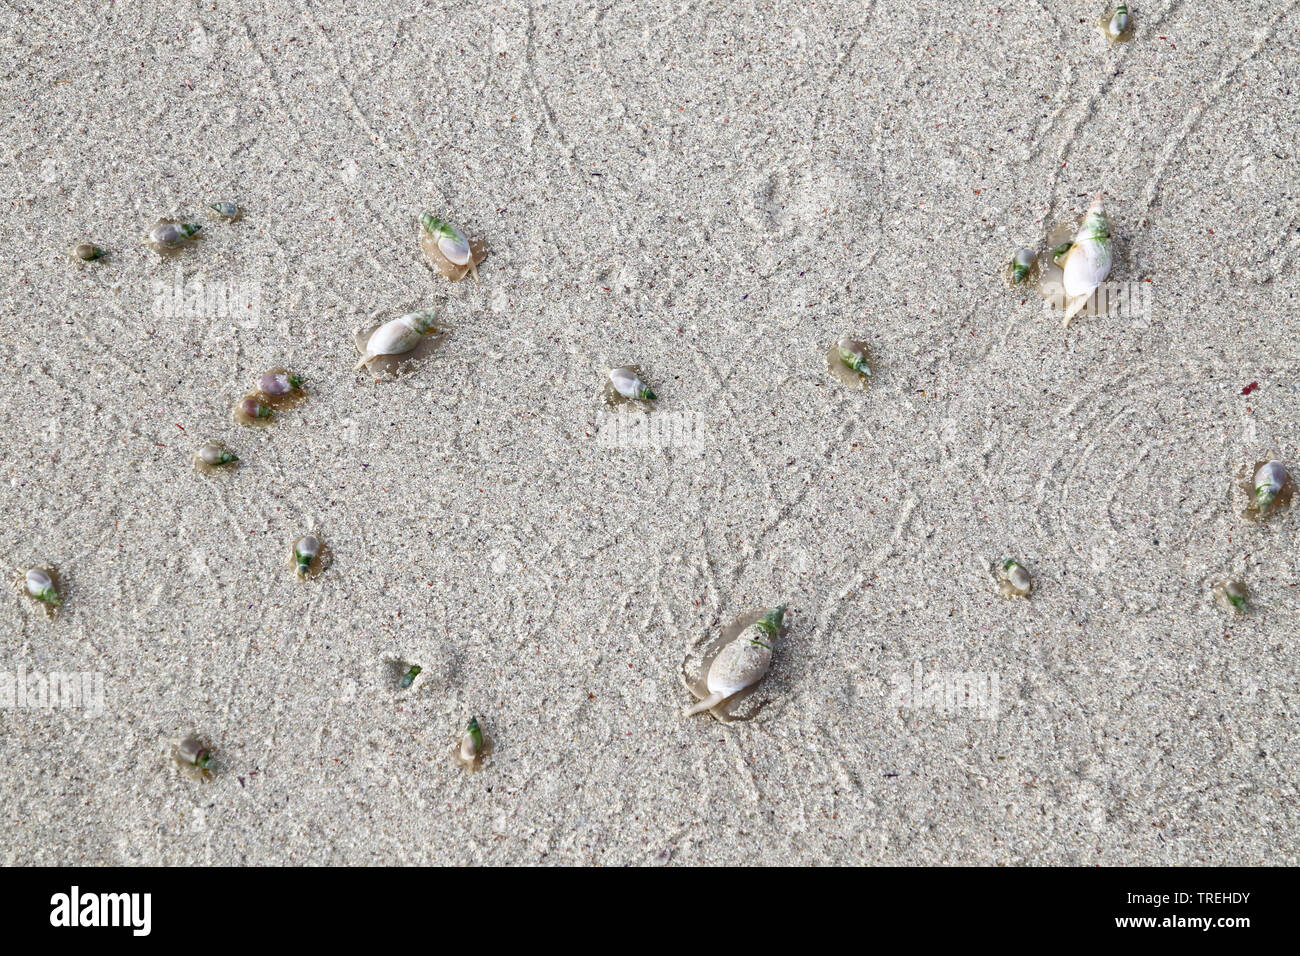 finger plough shell, plough snail (Bullia digitalis), on the beach, South Africa Stock Photo